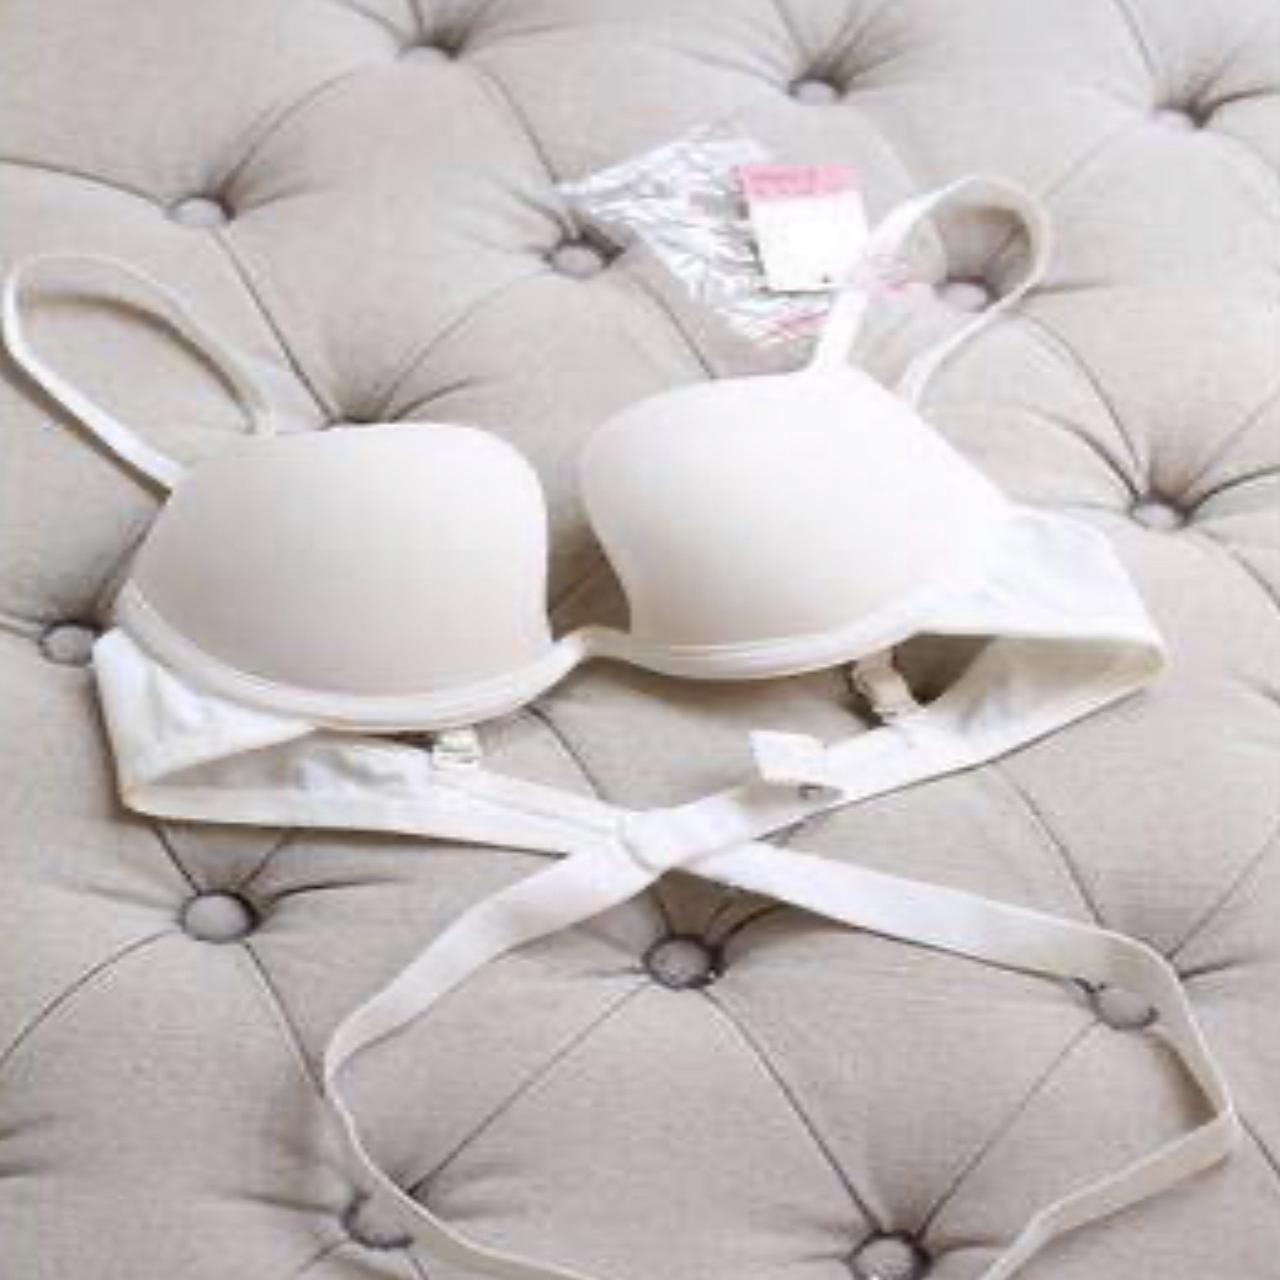 Product Image 3 - White deep plunge bra 

#swimwear